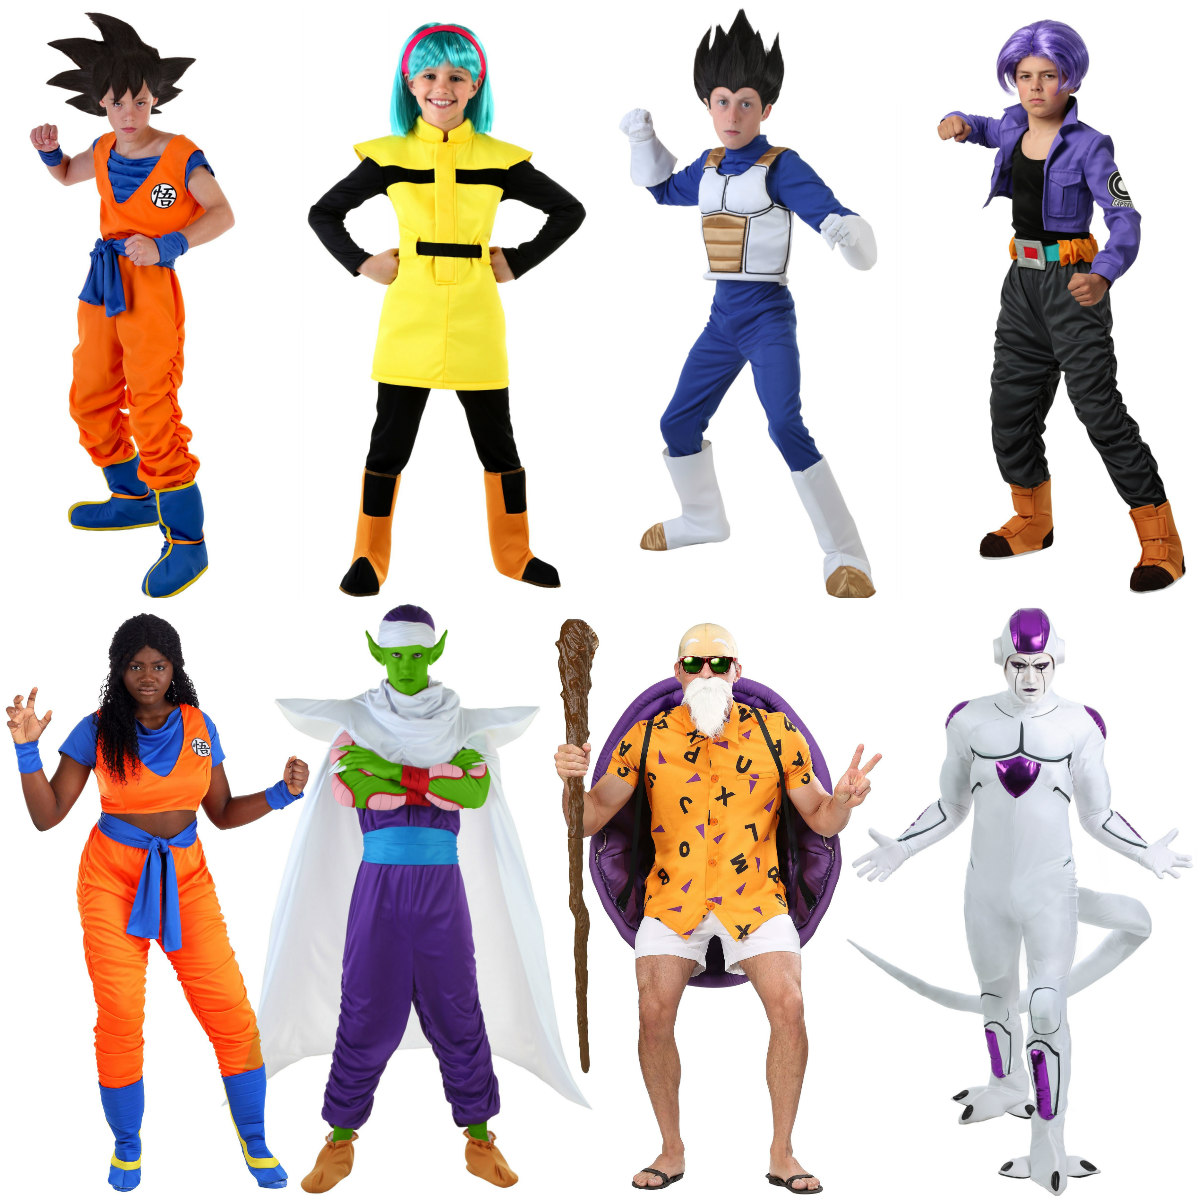 Dragon Ball Z Costumes